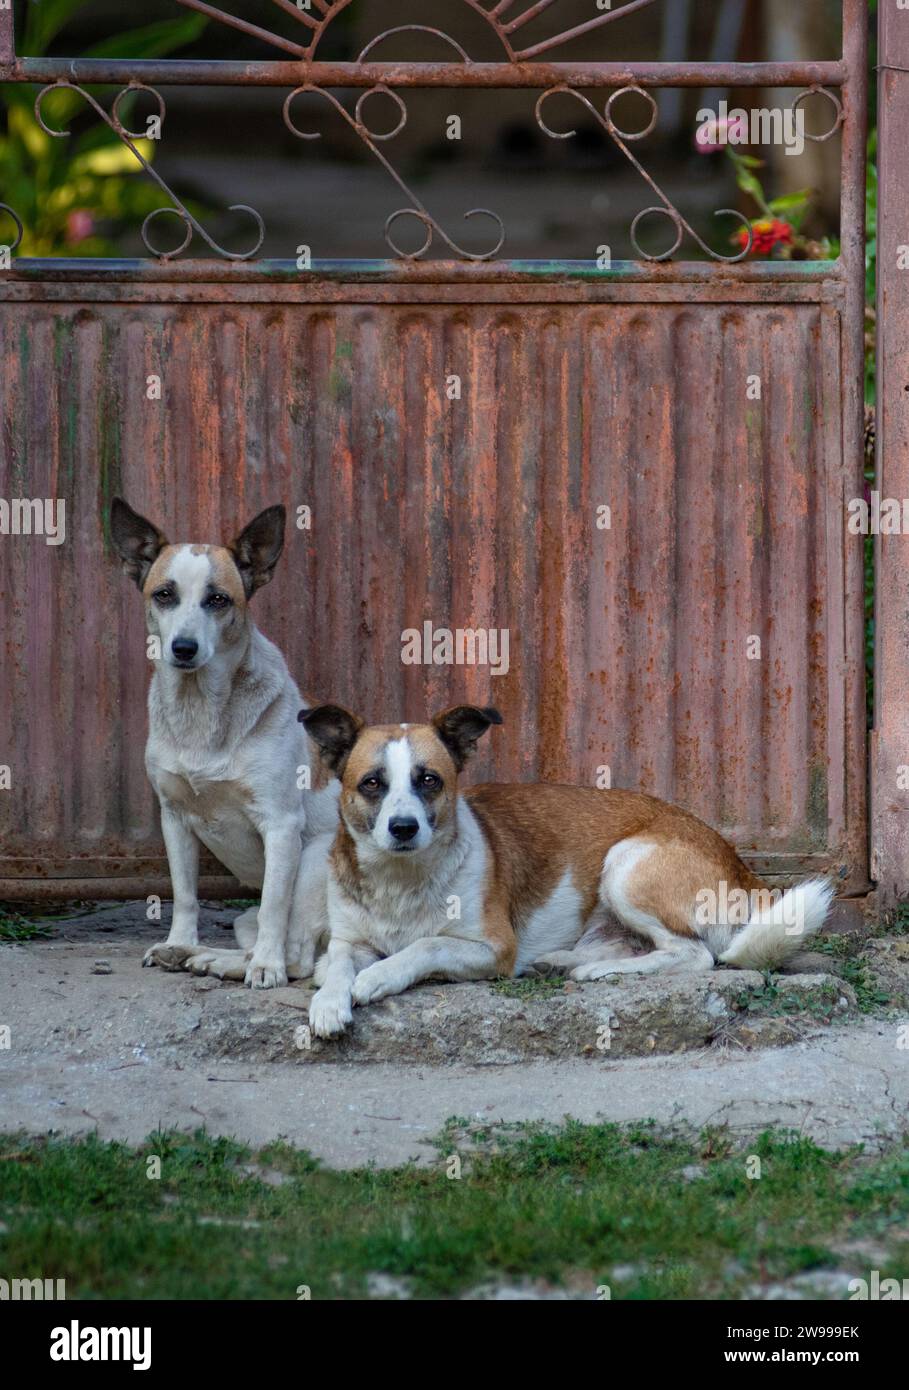 The two canine companions enjoying the sunshine outdoors near a metal gate. Stock Photo